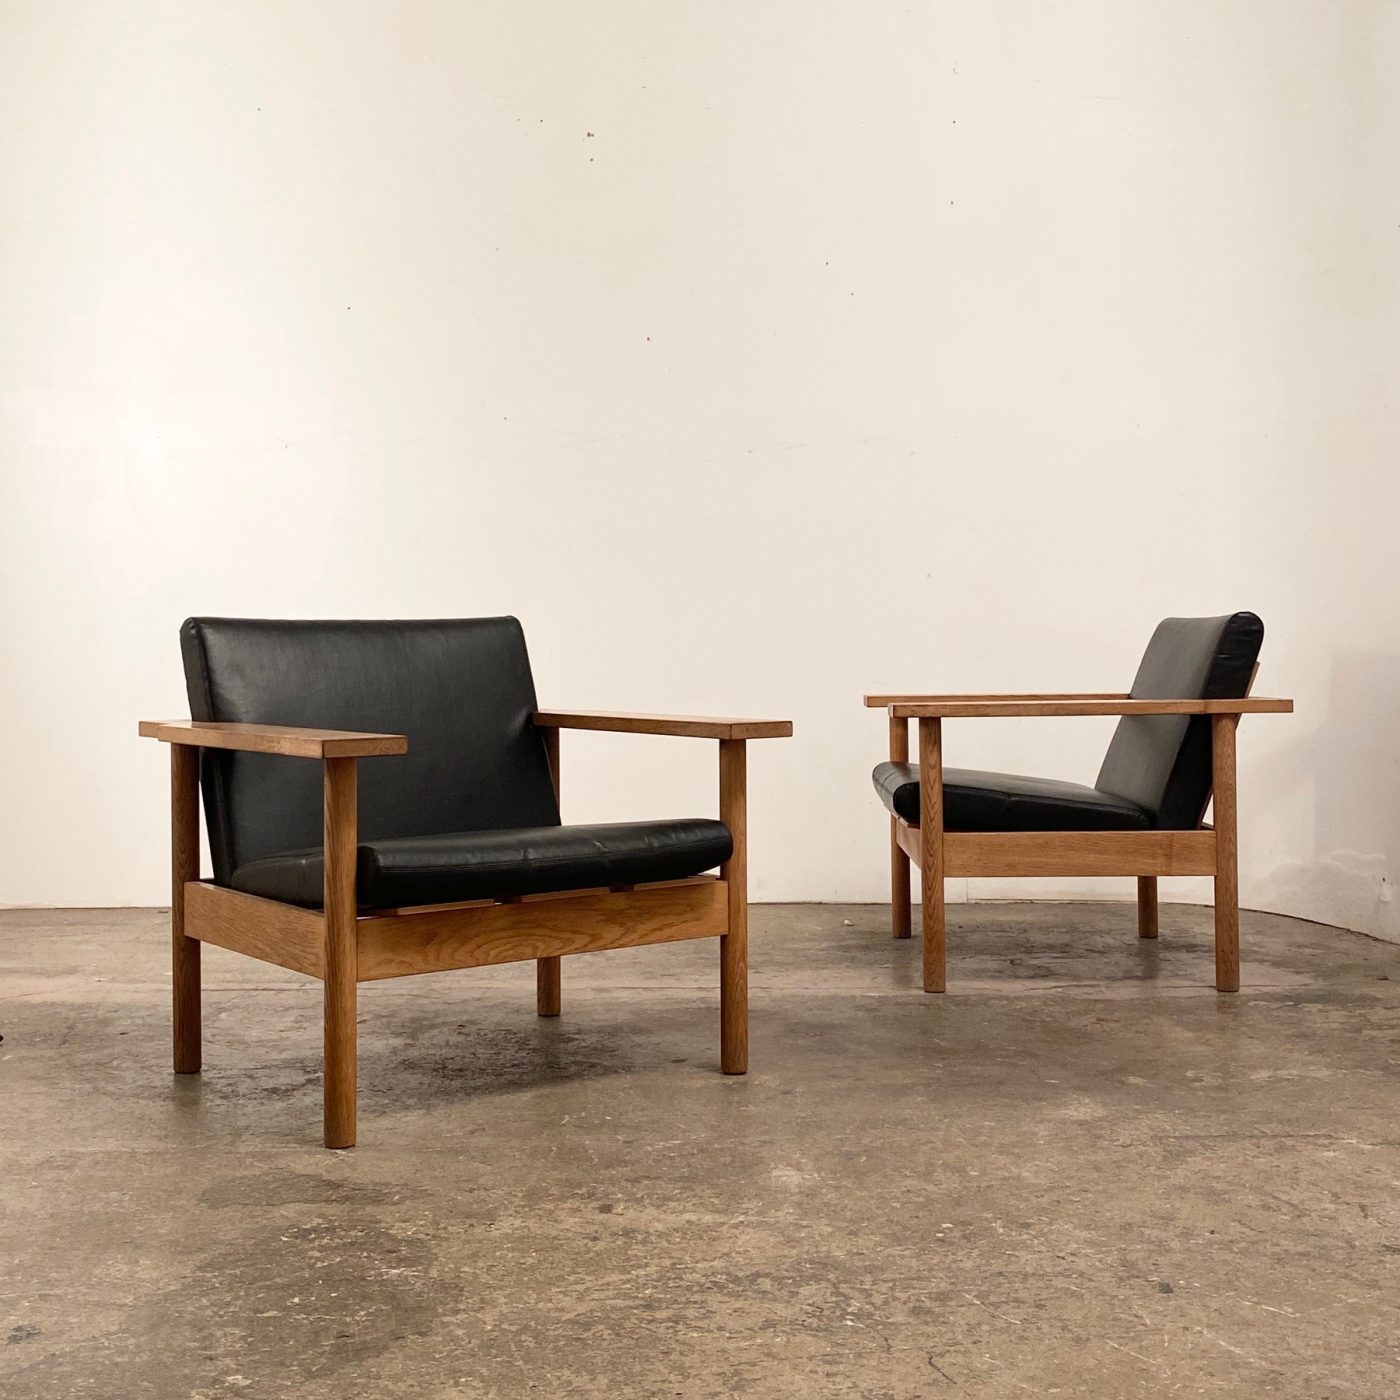 objet-vagabond-danish-chairs0007